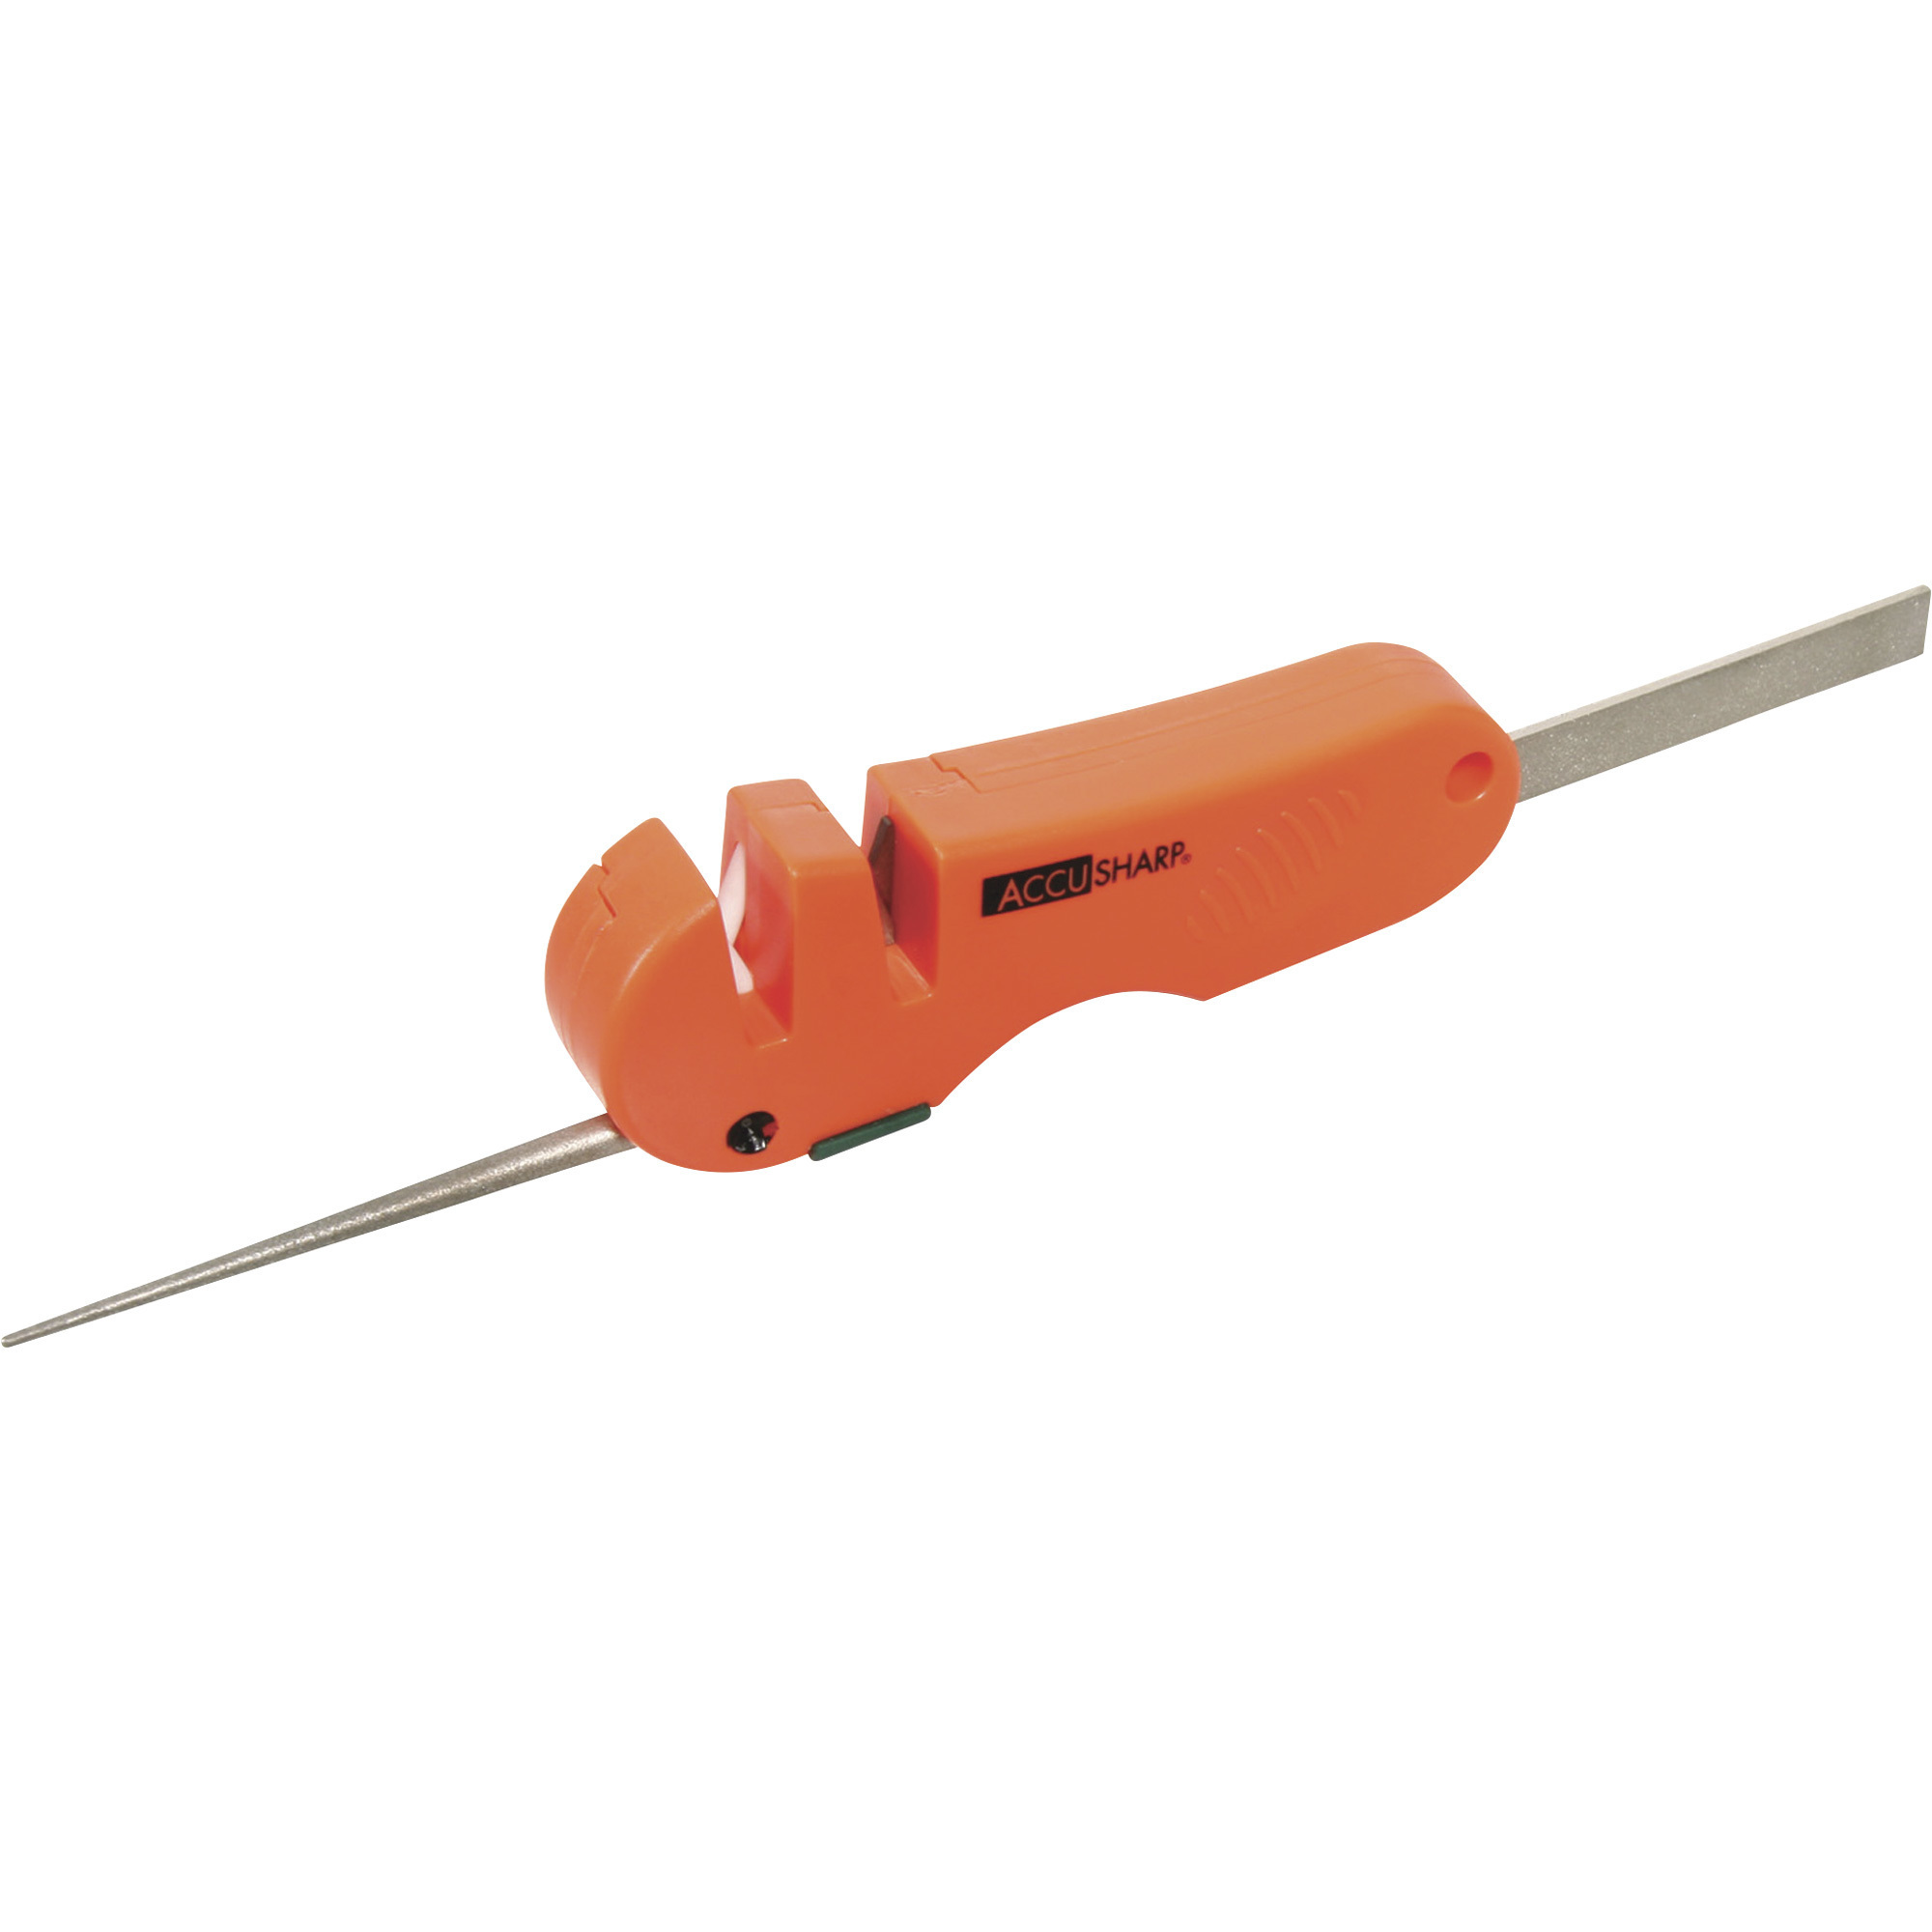 AccuSharp 4-in-1 Knife and Tool Sharpener, Model 028C